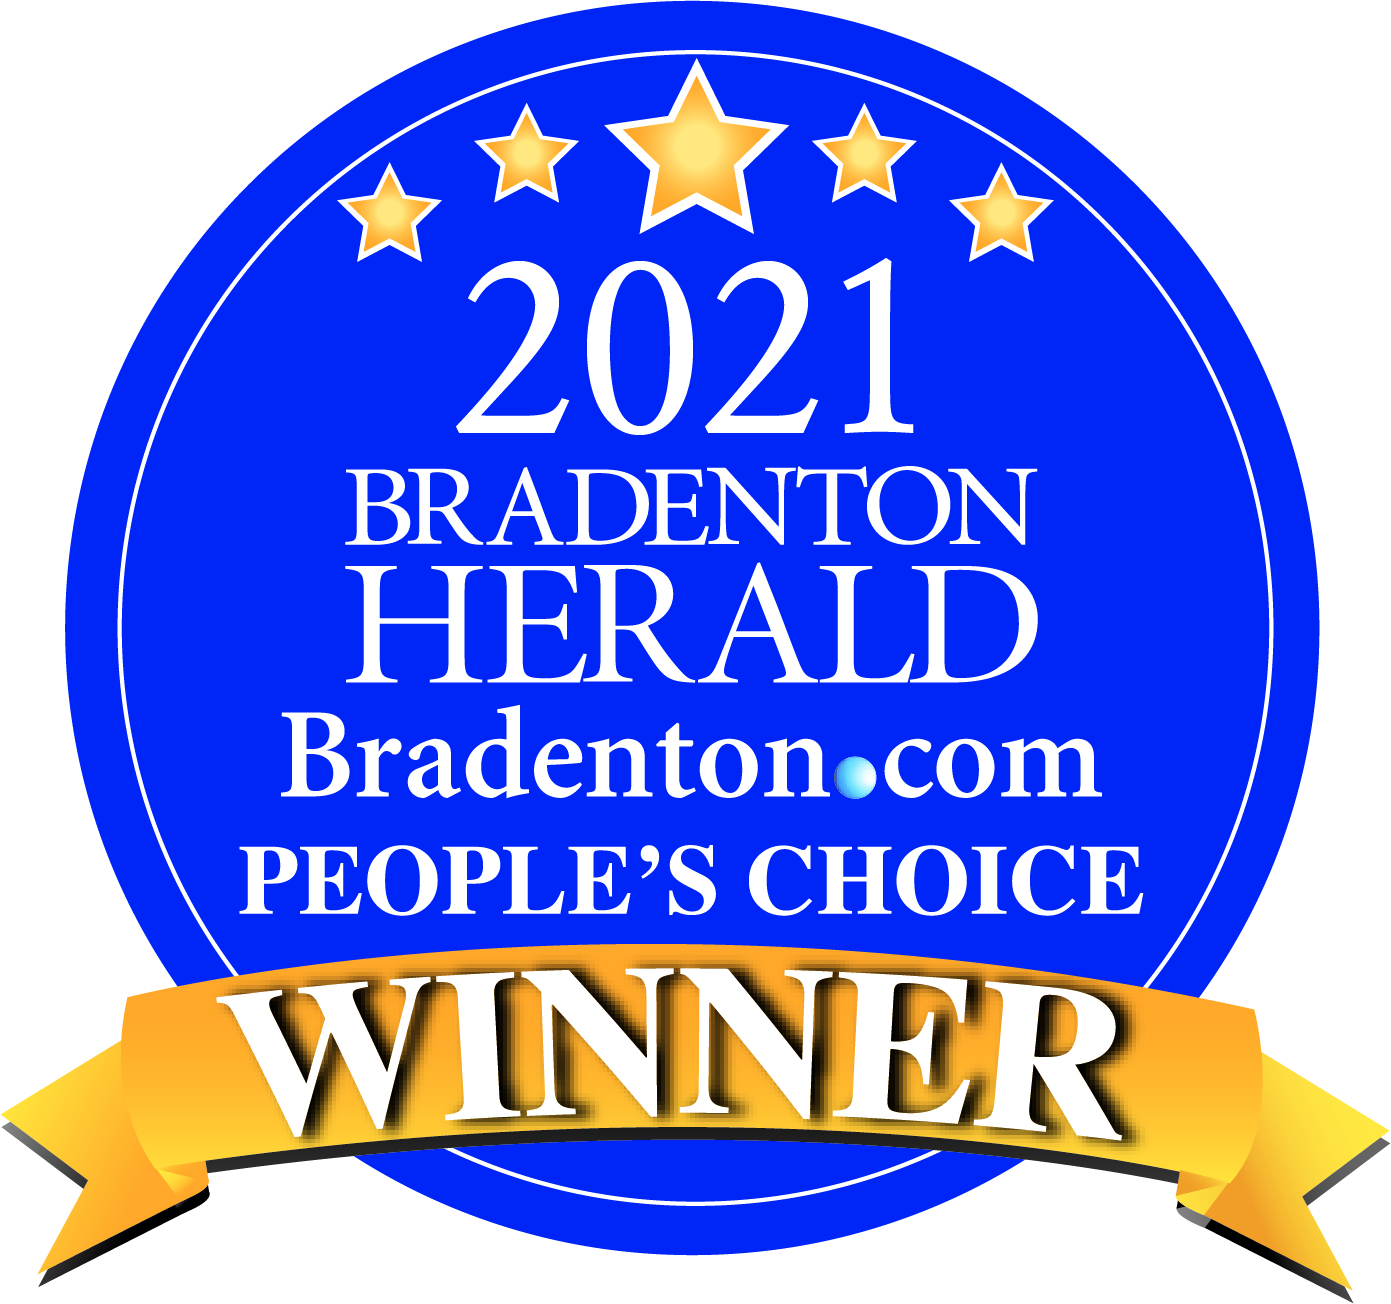 2021 Bradenton Herald Winner